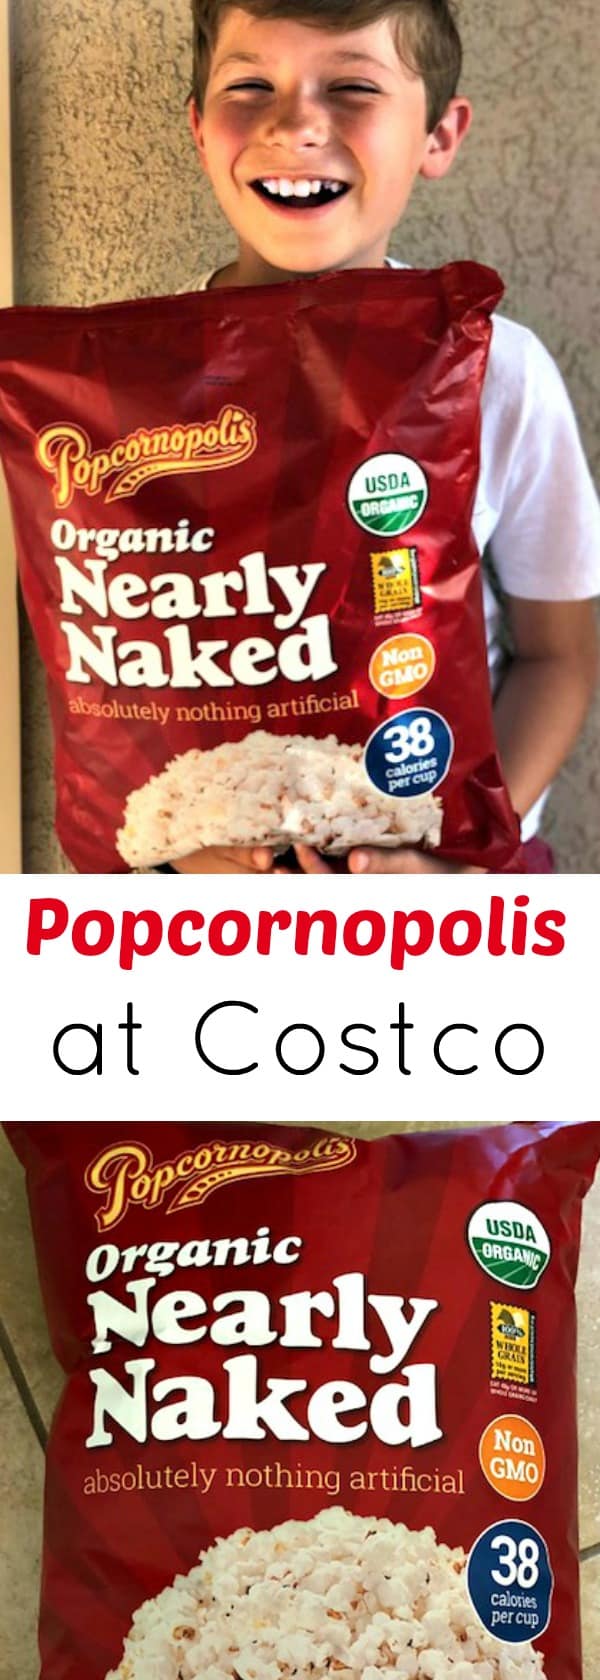 Popcornopolis Deal at Costco